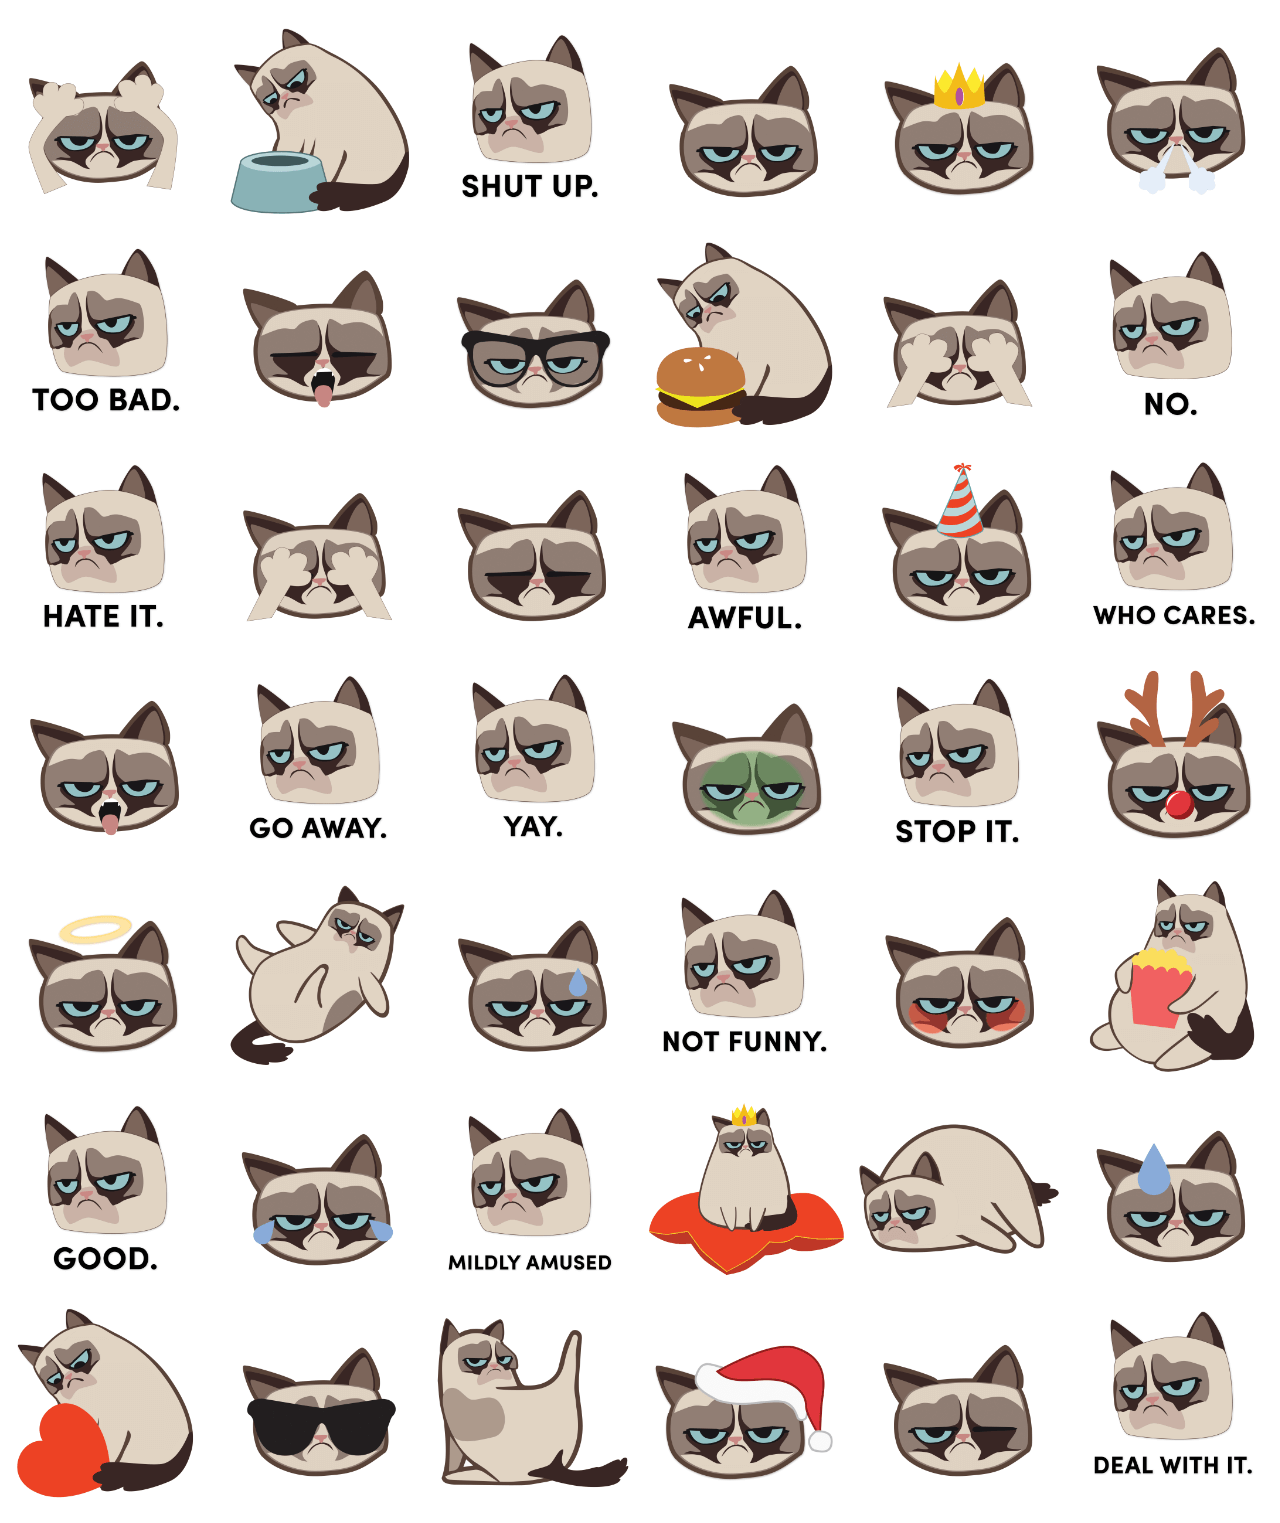 About | Grumpy Cat®